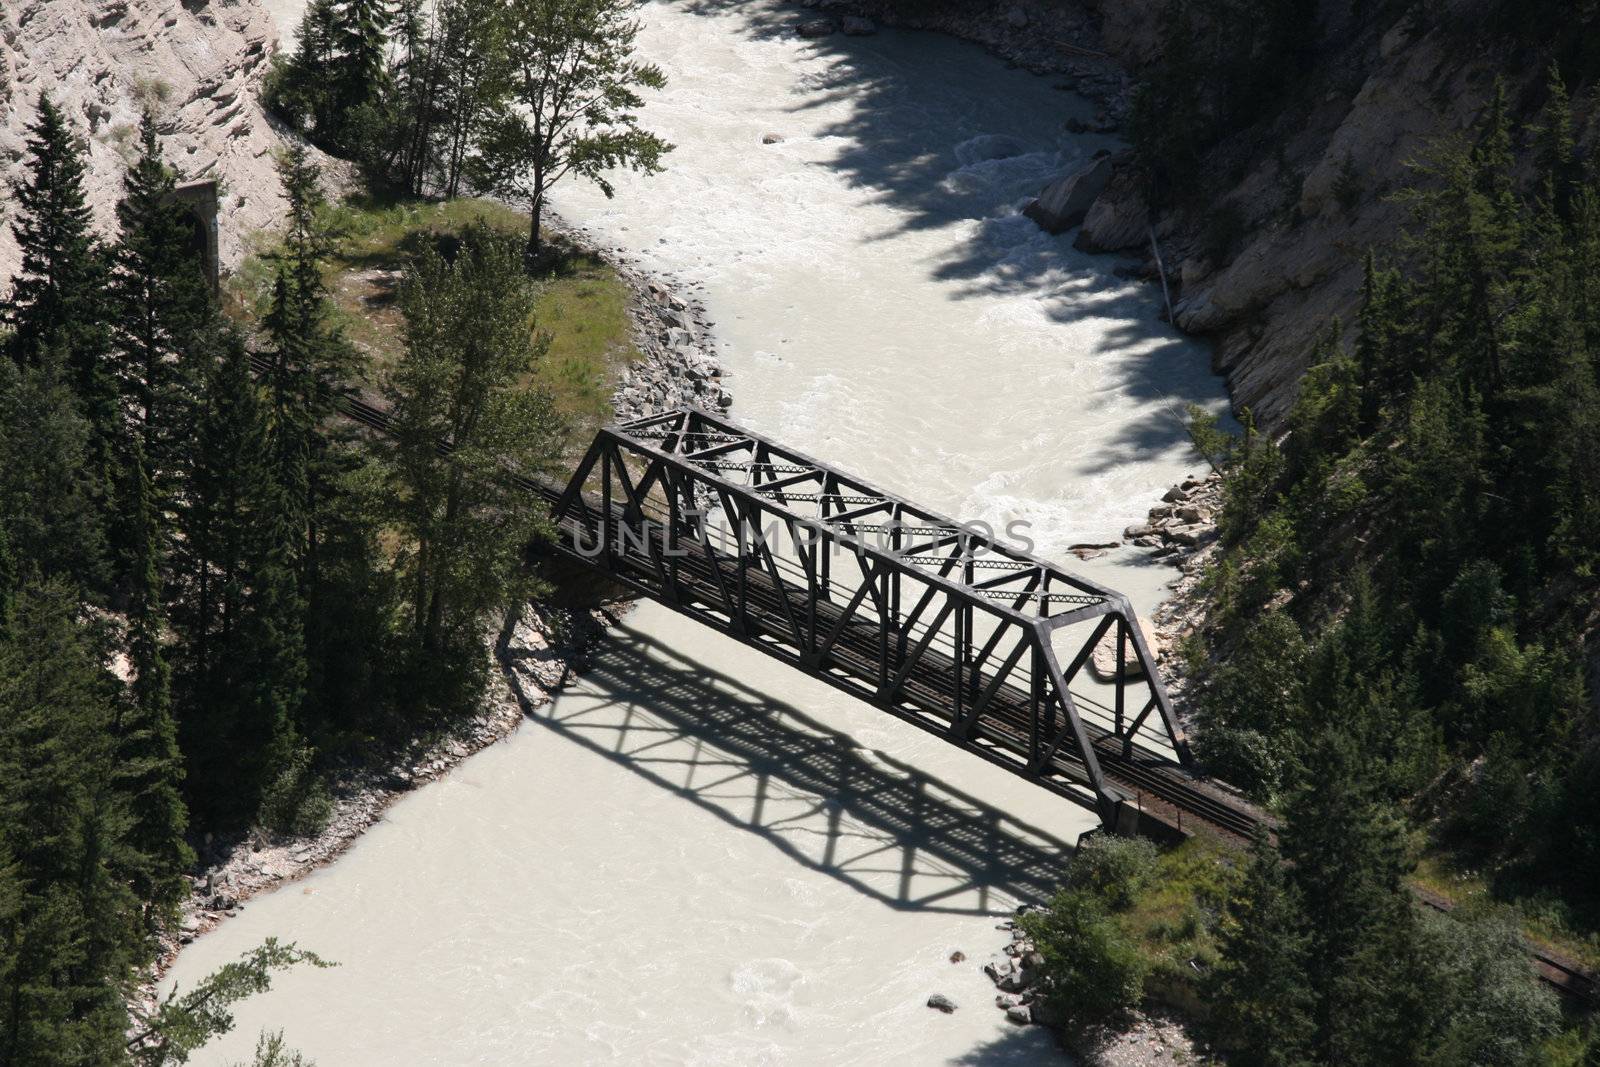 Bridge on Kicking Horse River - Canadian Pacific Railway